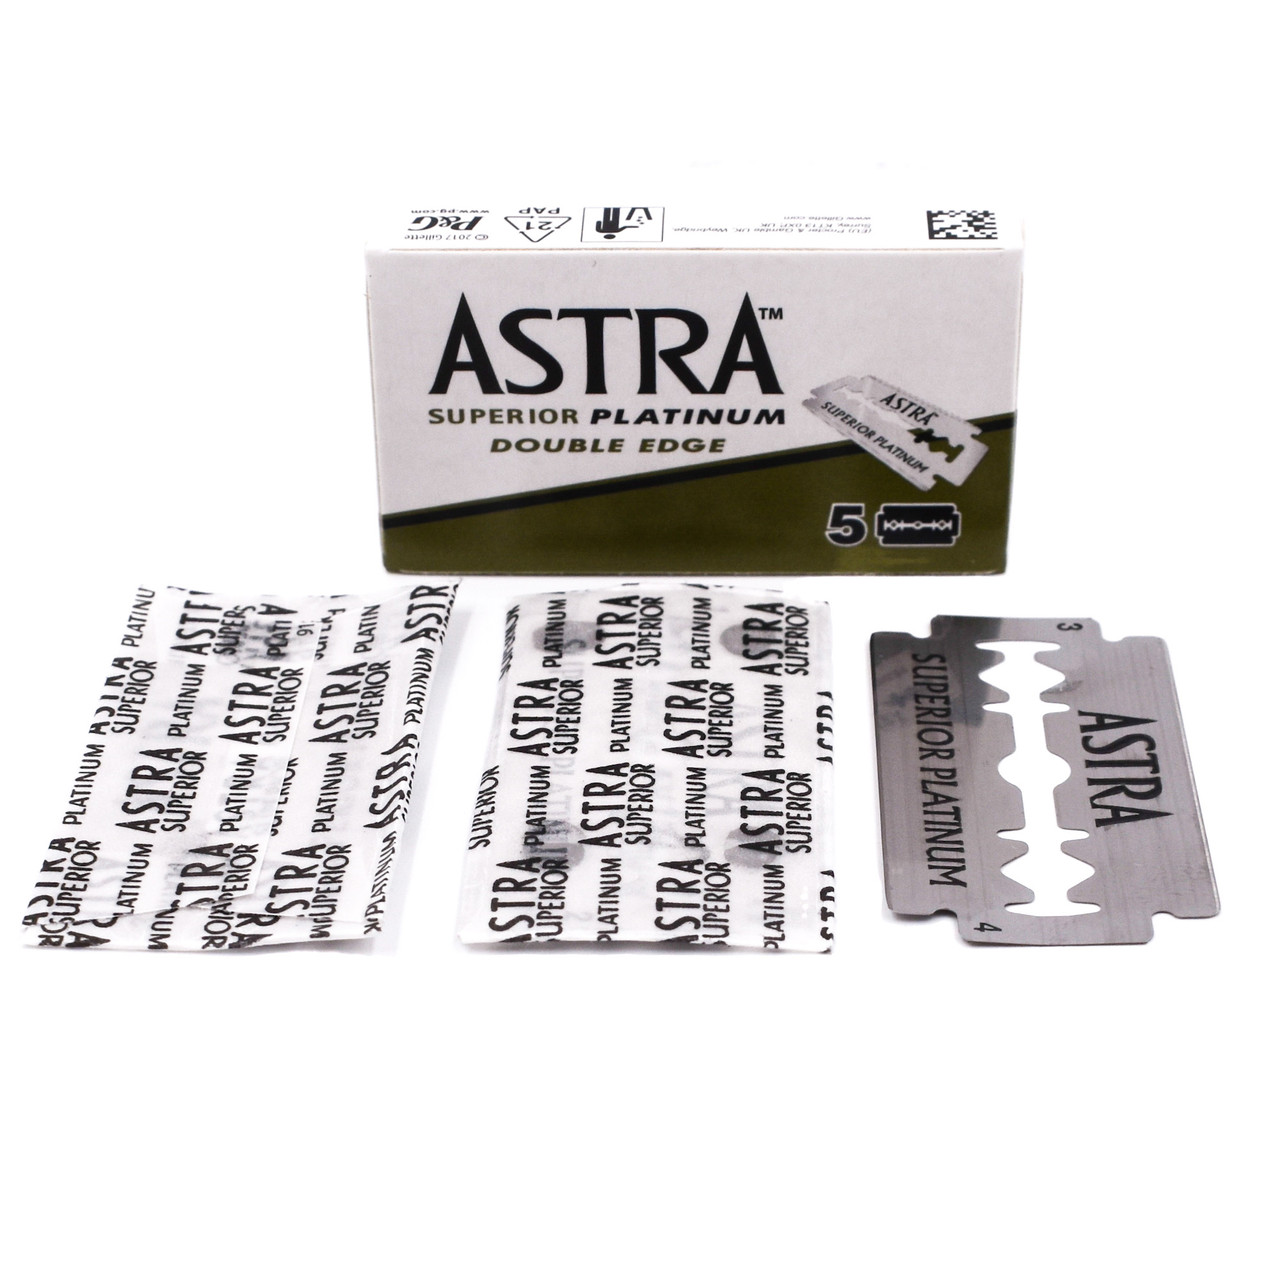 100 Astra Platinum Double Edge Safety Razor Blades